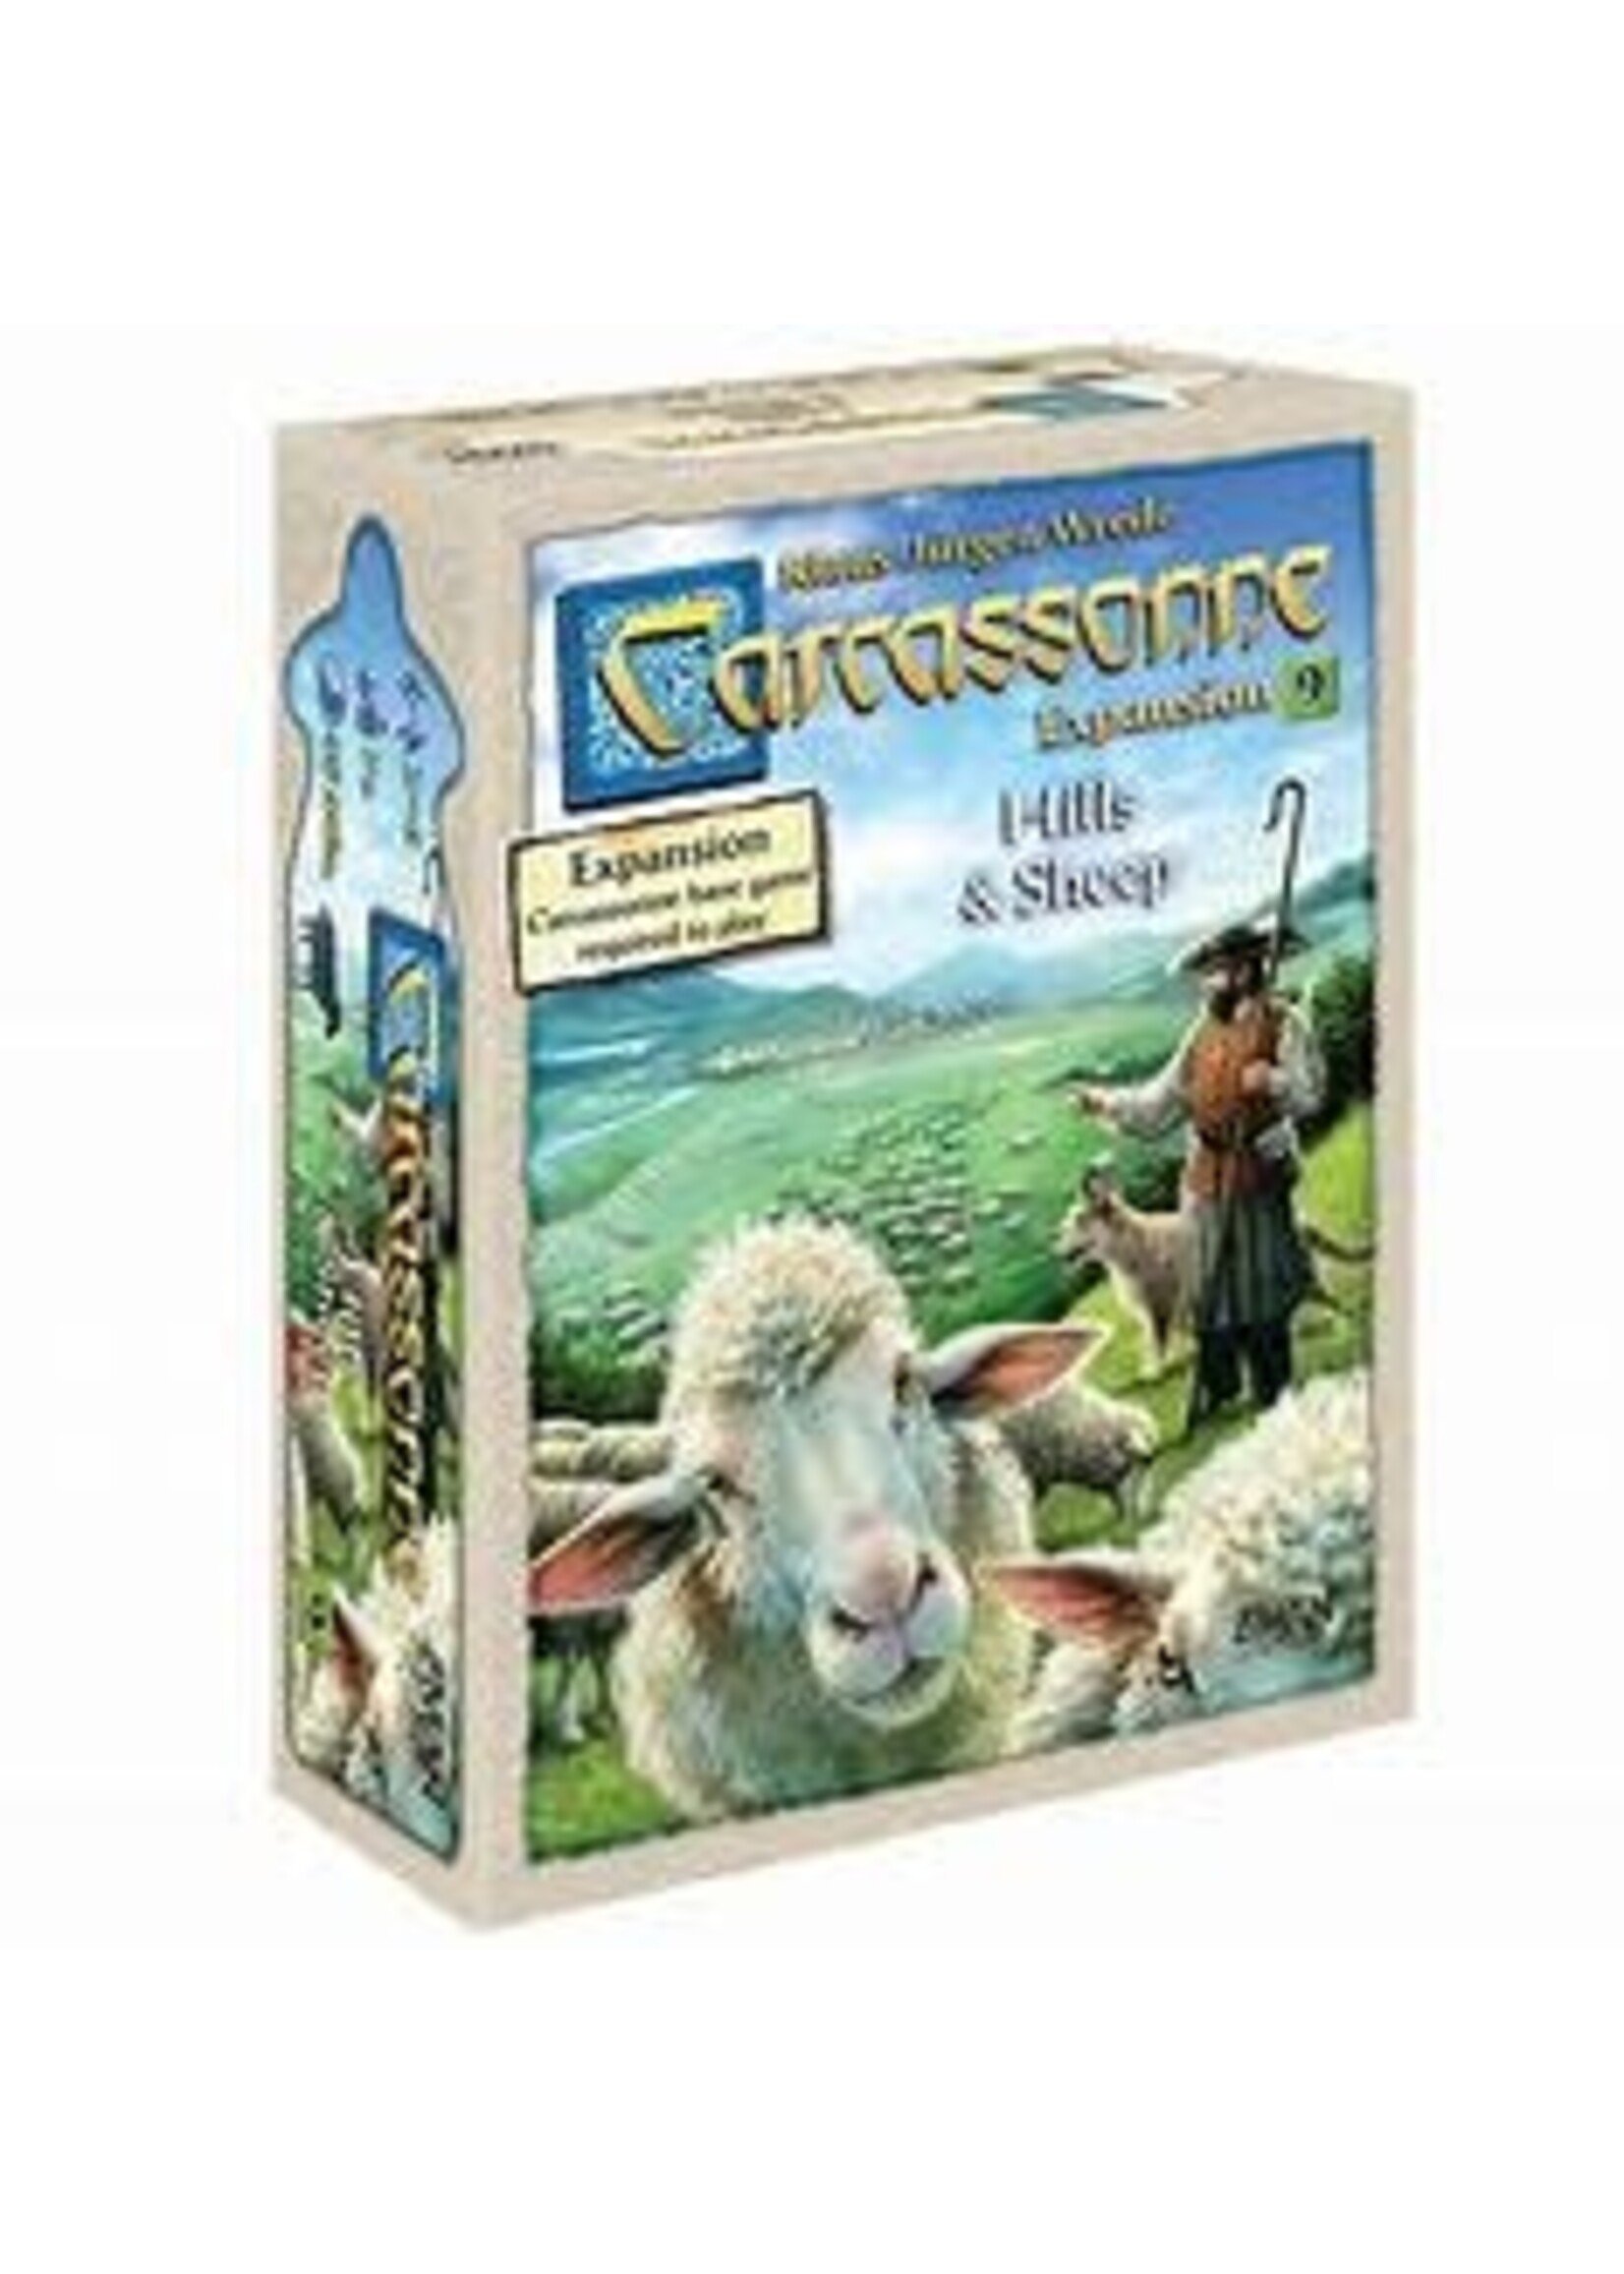 Z-Man Games Carcassonne Expansion 9 Hills & Sheep